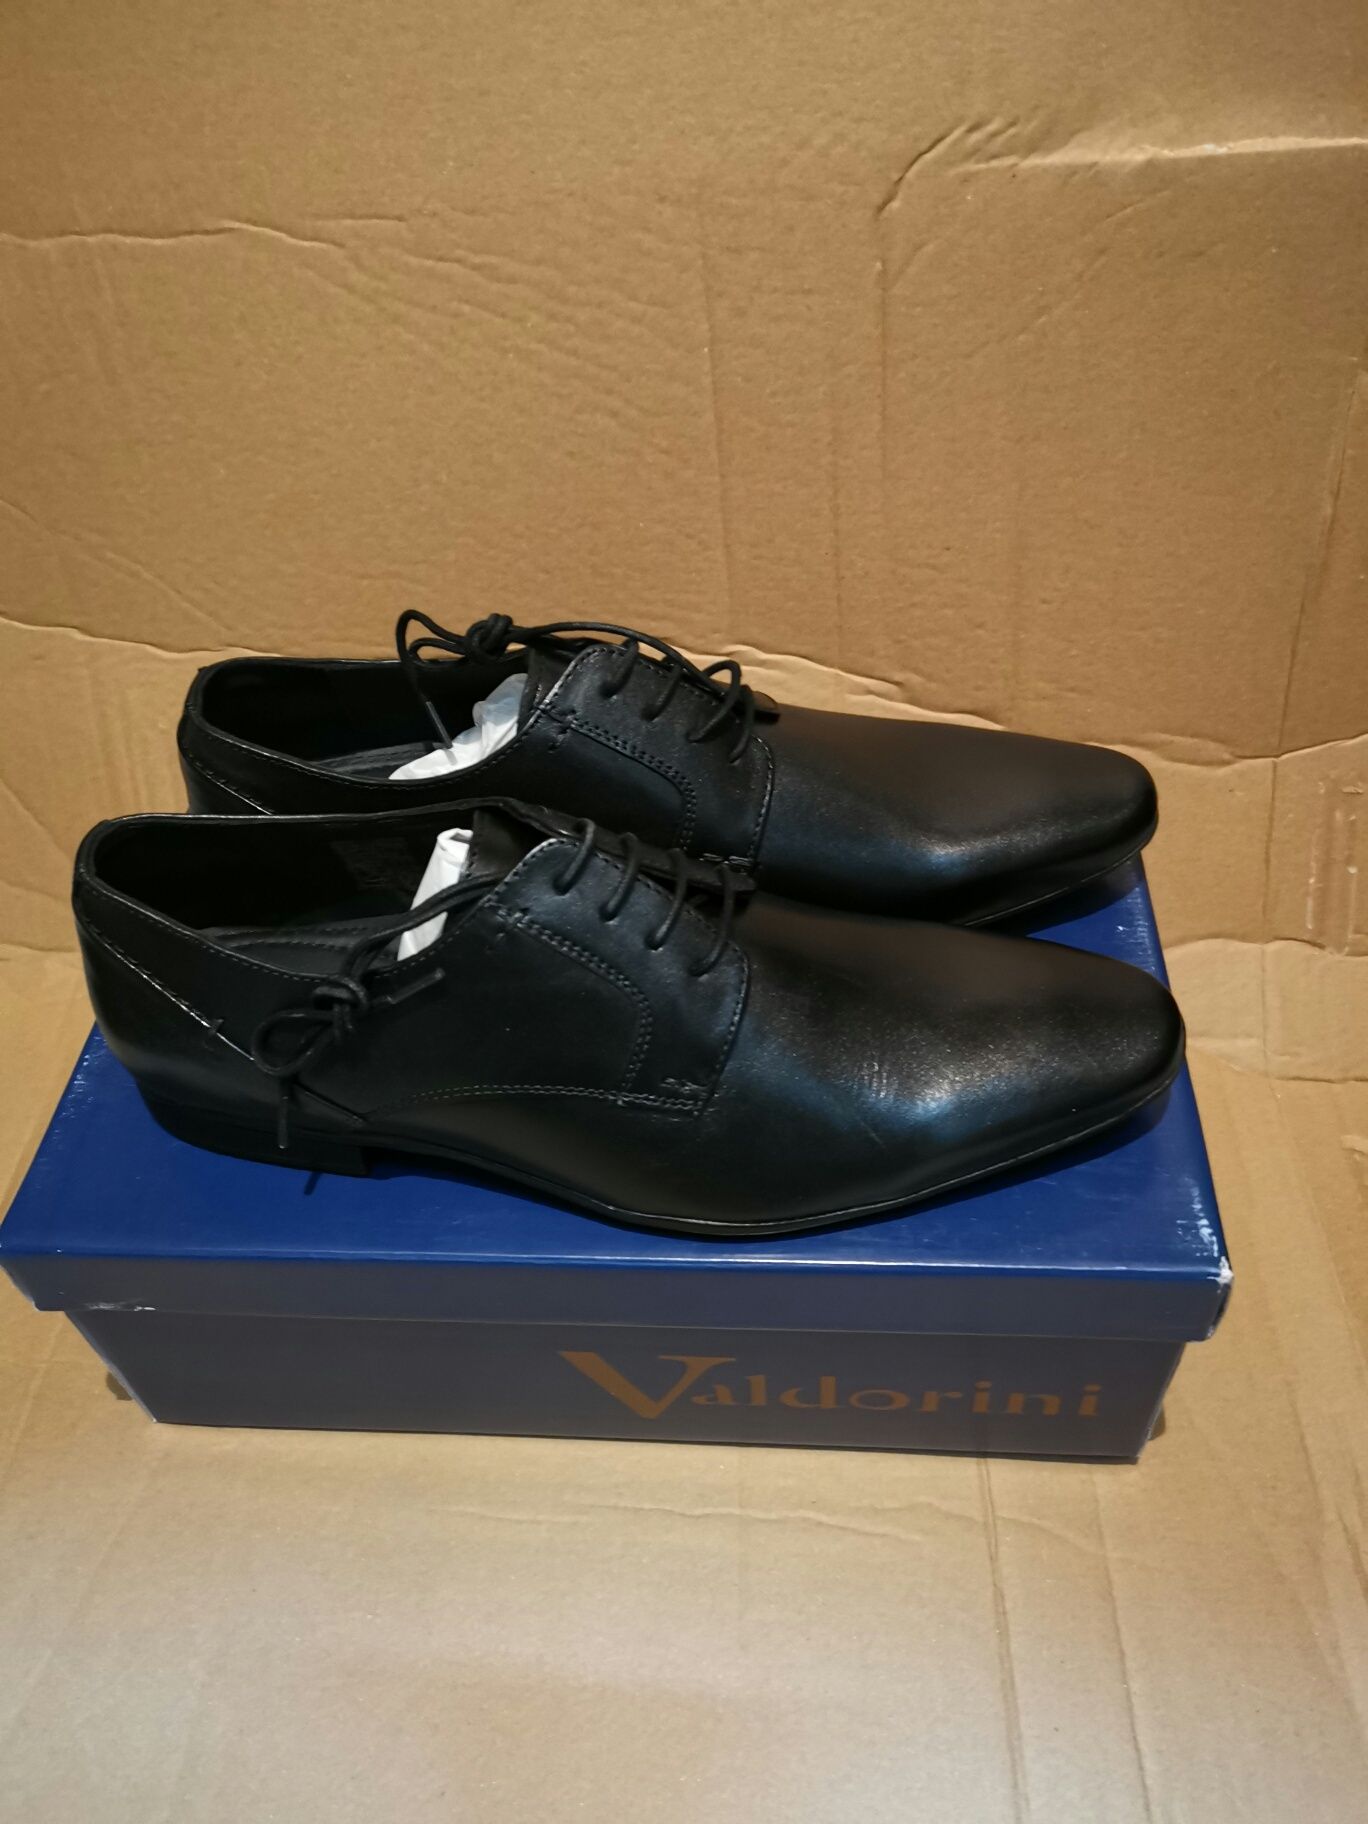 Обувки Valdorini  мъжки - черни, бежави и кафяви(N 42,44)